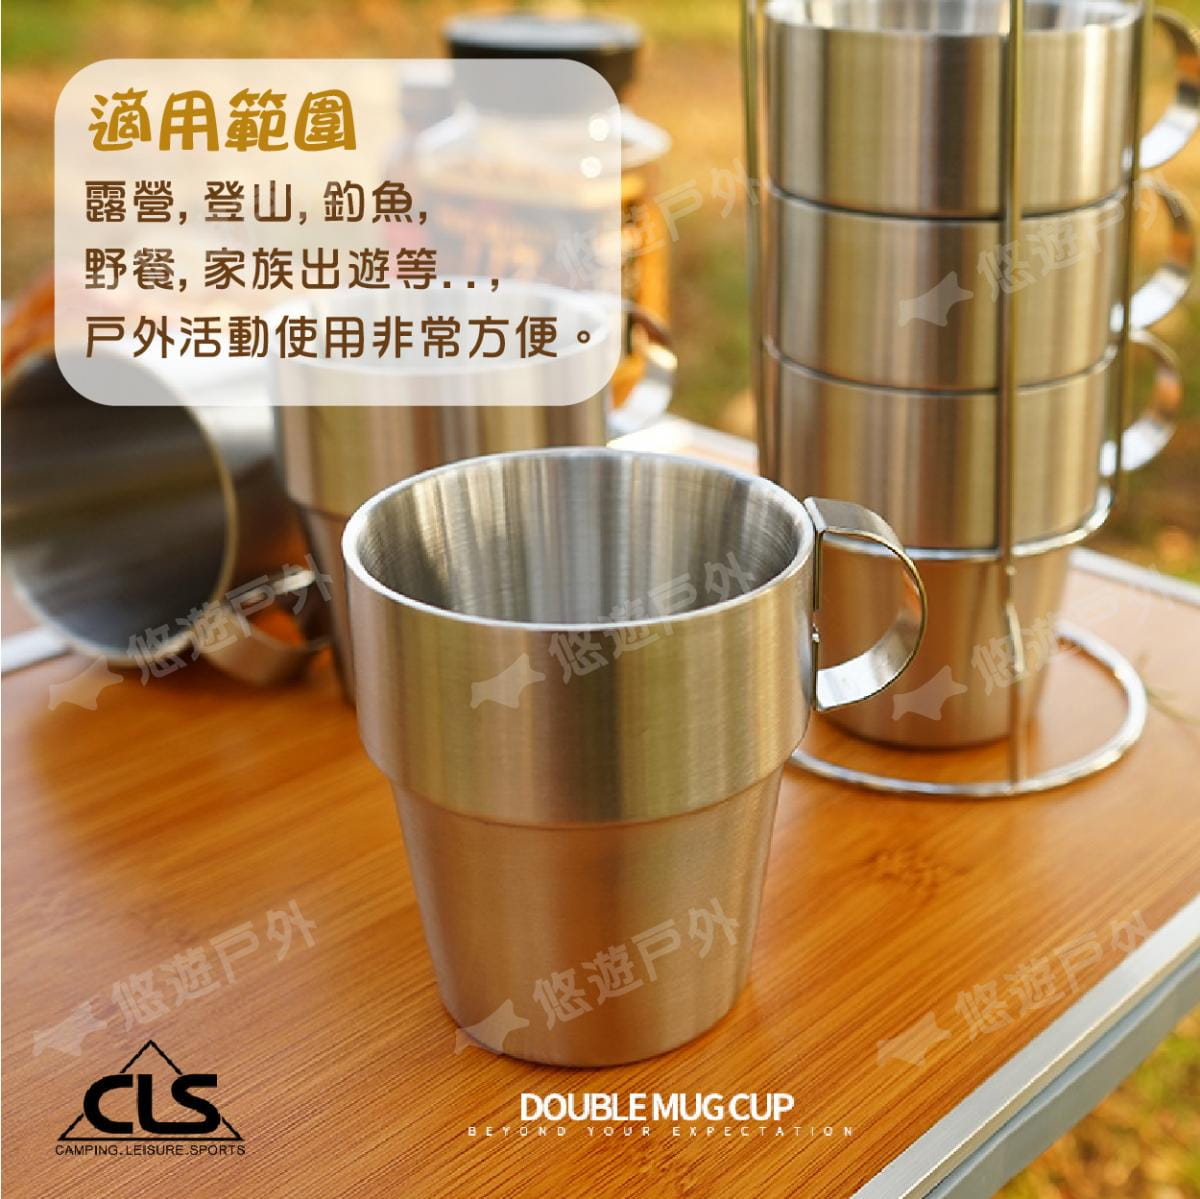 【CLS】304不鏽鋼雙層咖啡杯6入組 含杯架+收納袋 (悠遊戶外) 1